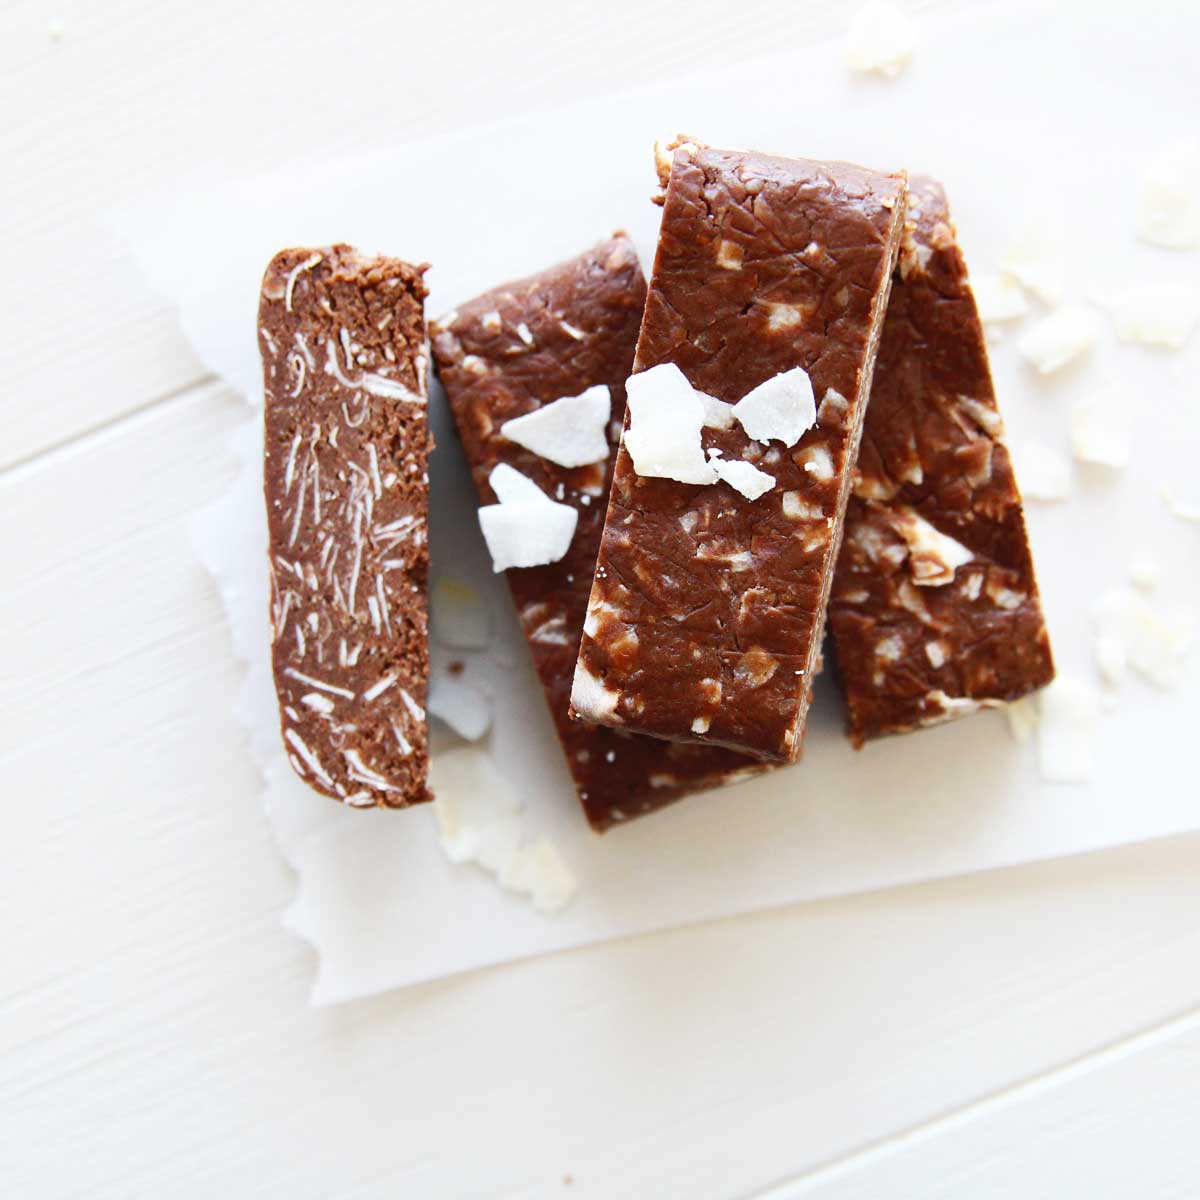 Vegan Coconut Chocolate "Almond Joy" Protein Bars Recipe - PB Fit Nice Cream